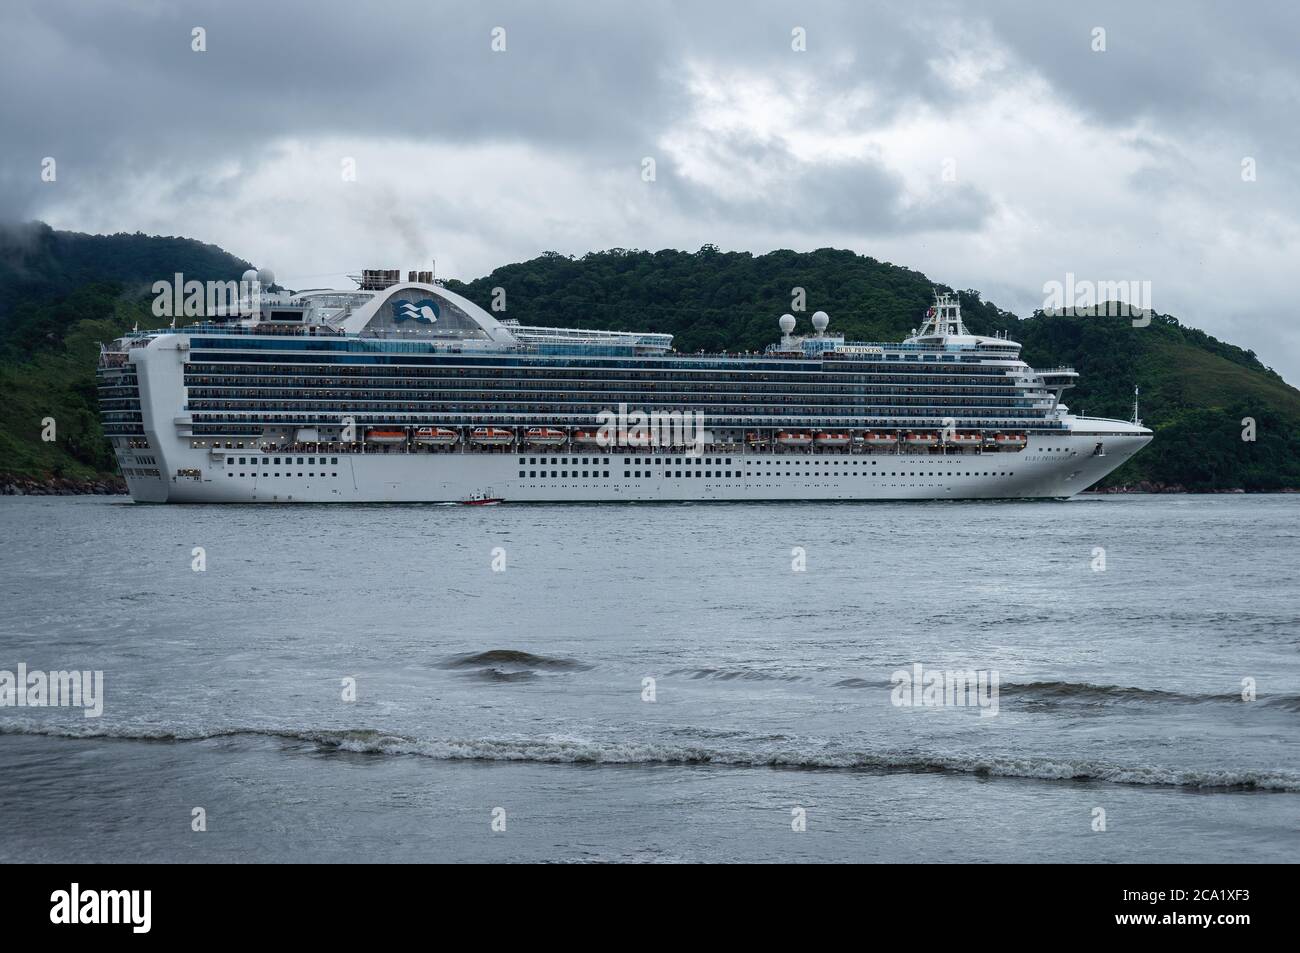 The Crown-class cruise ship 'Ruby Princess' leaving the Port of Santos under rainy overcast sky. View from Luiz La Scalla alderman square. Stock Photo